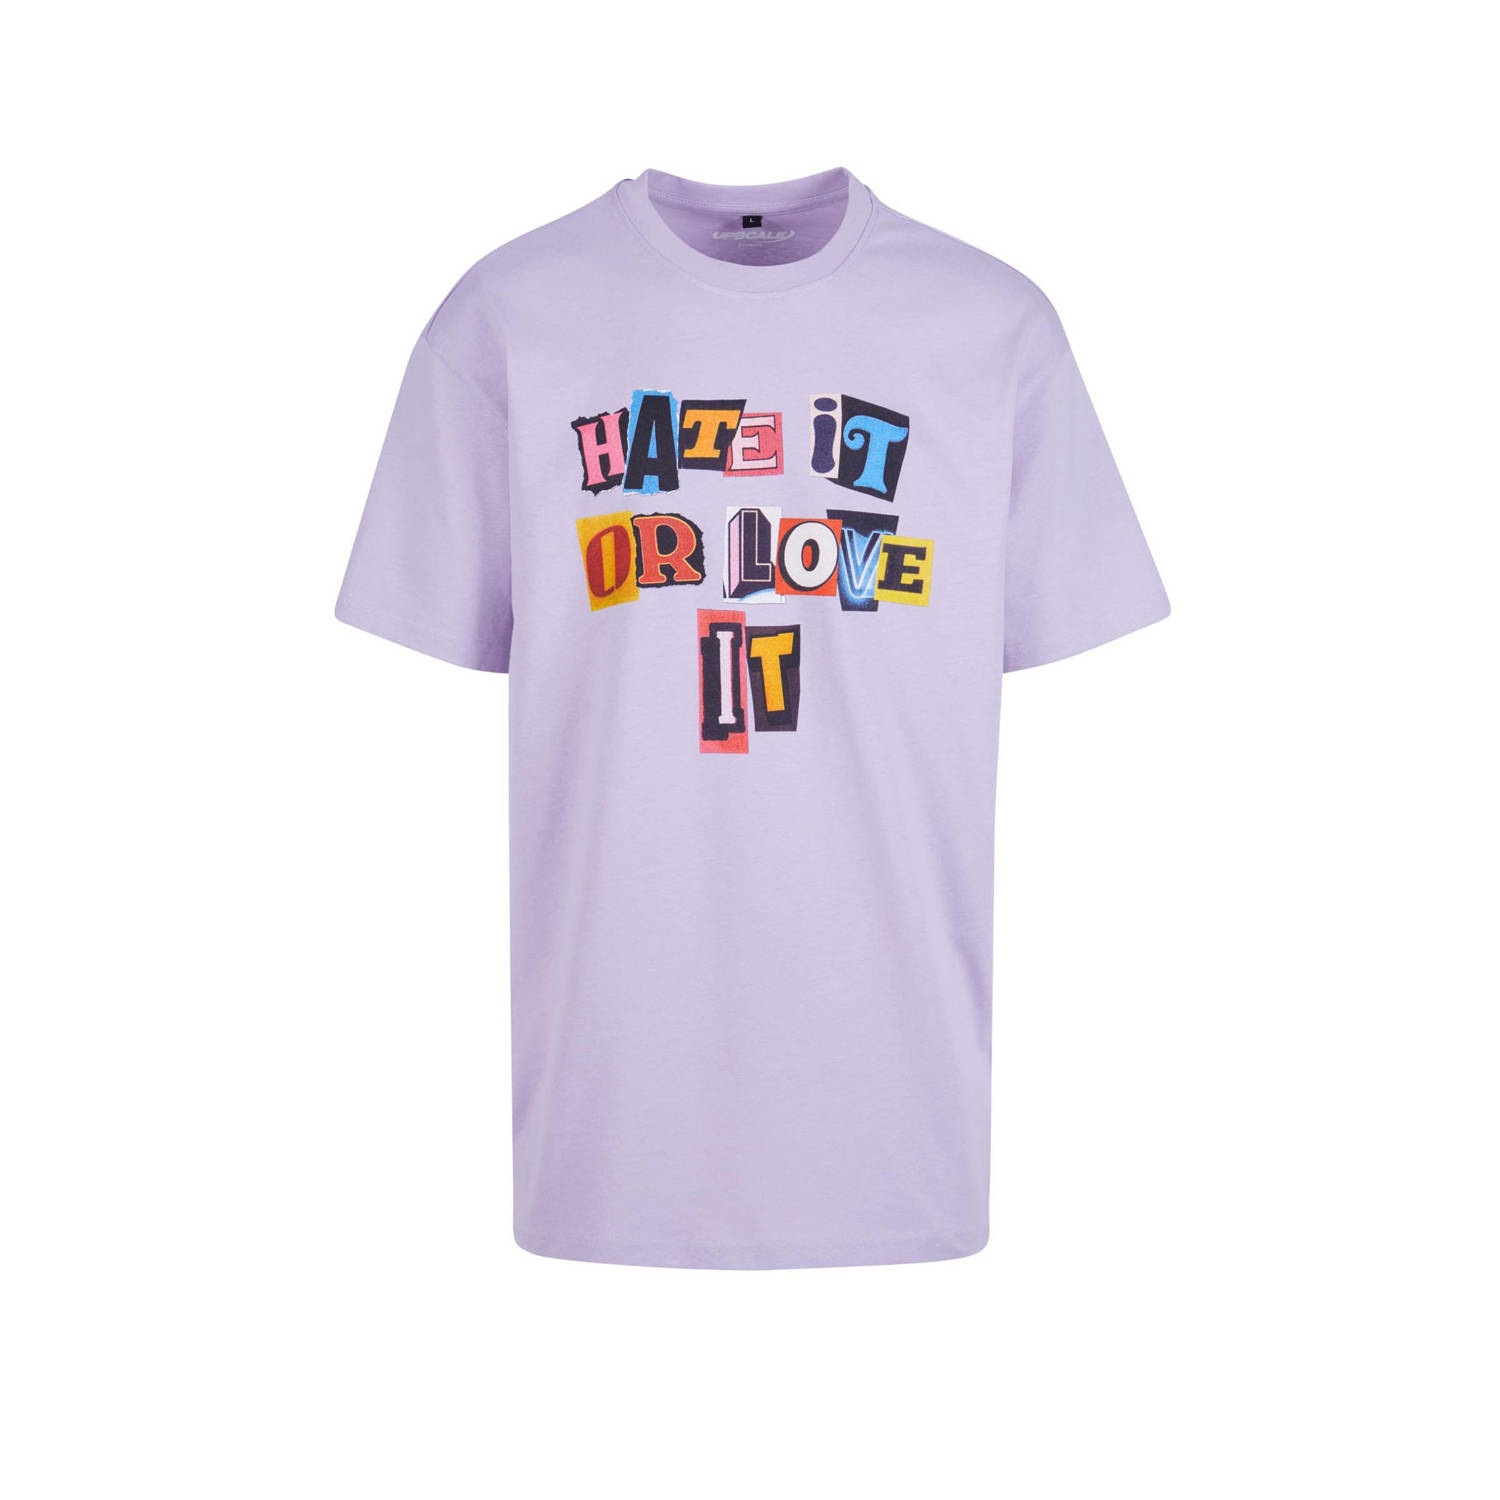 Mister Tee T-shirt met printopdruk lilac